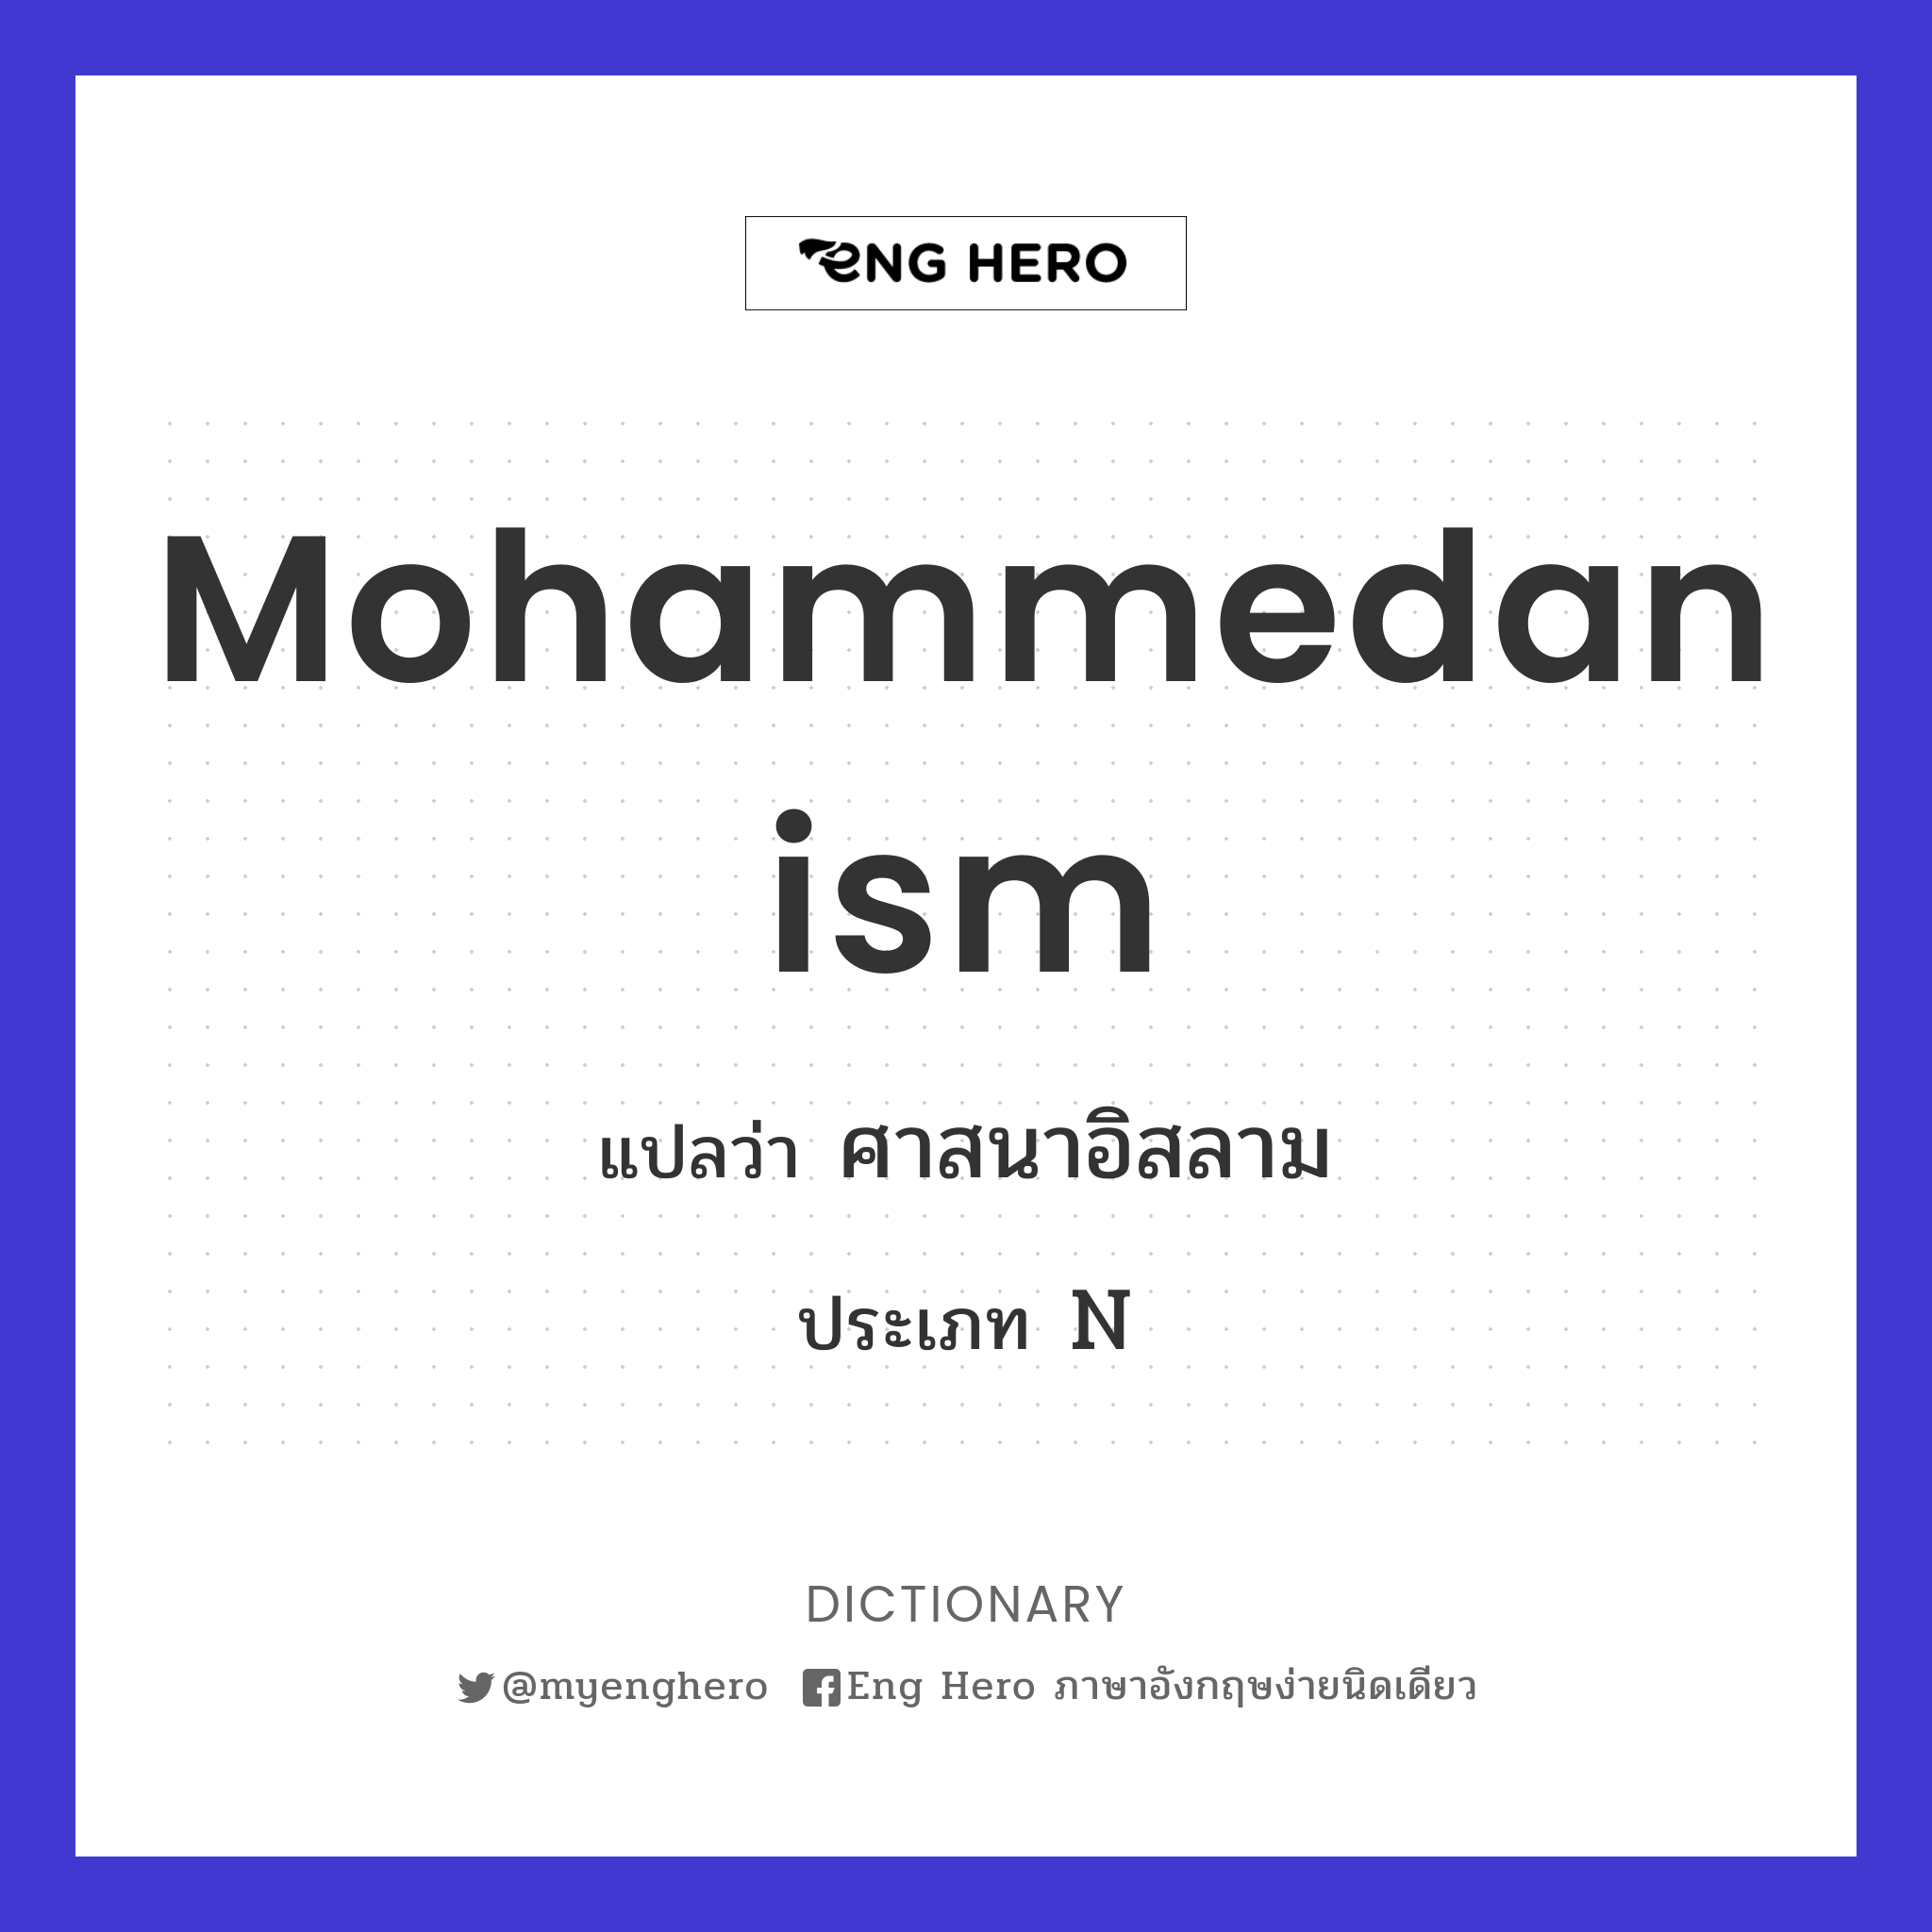 Mohammedanism